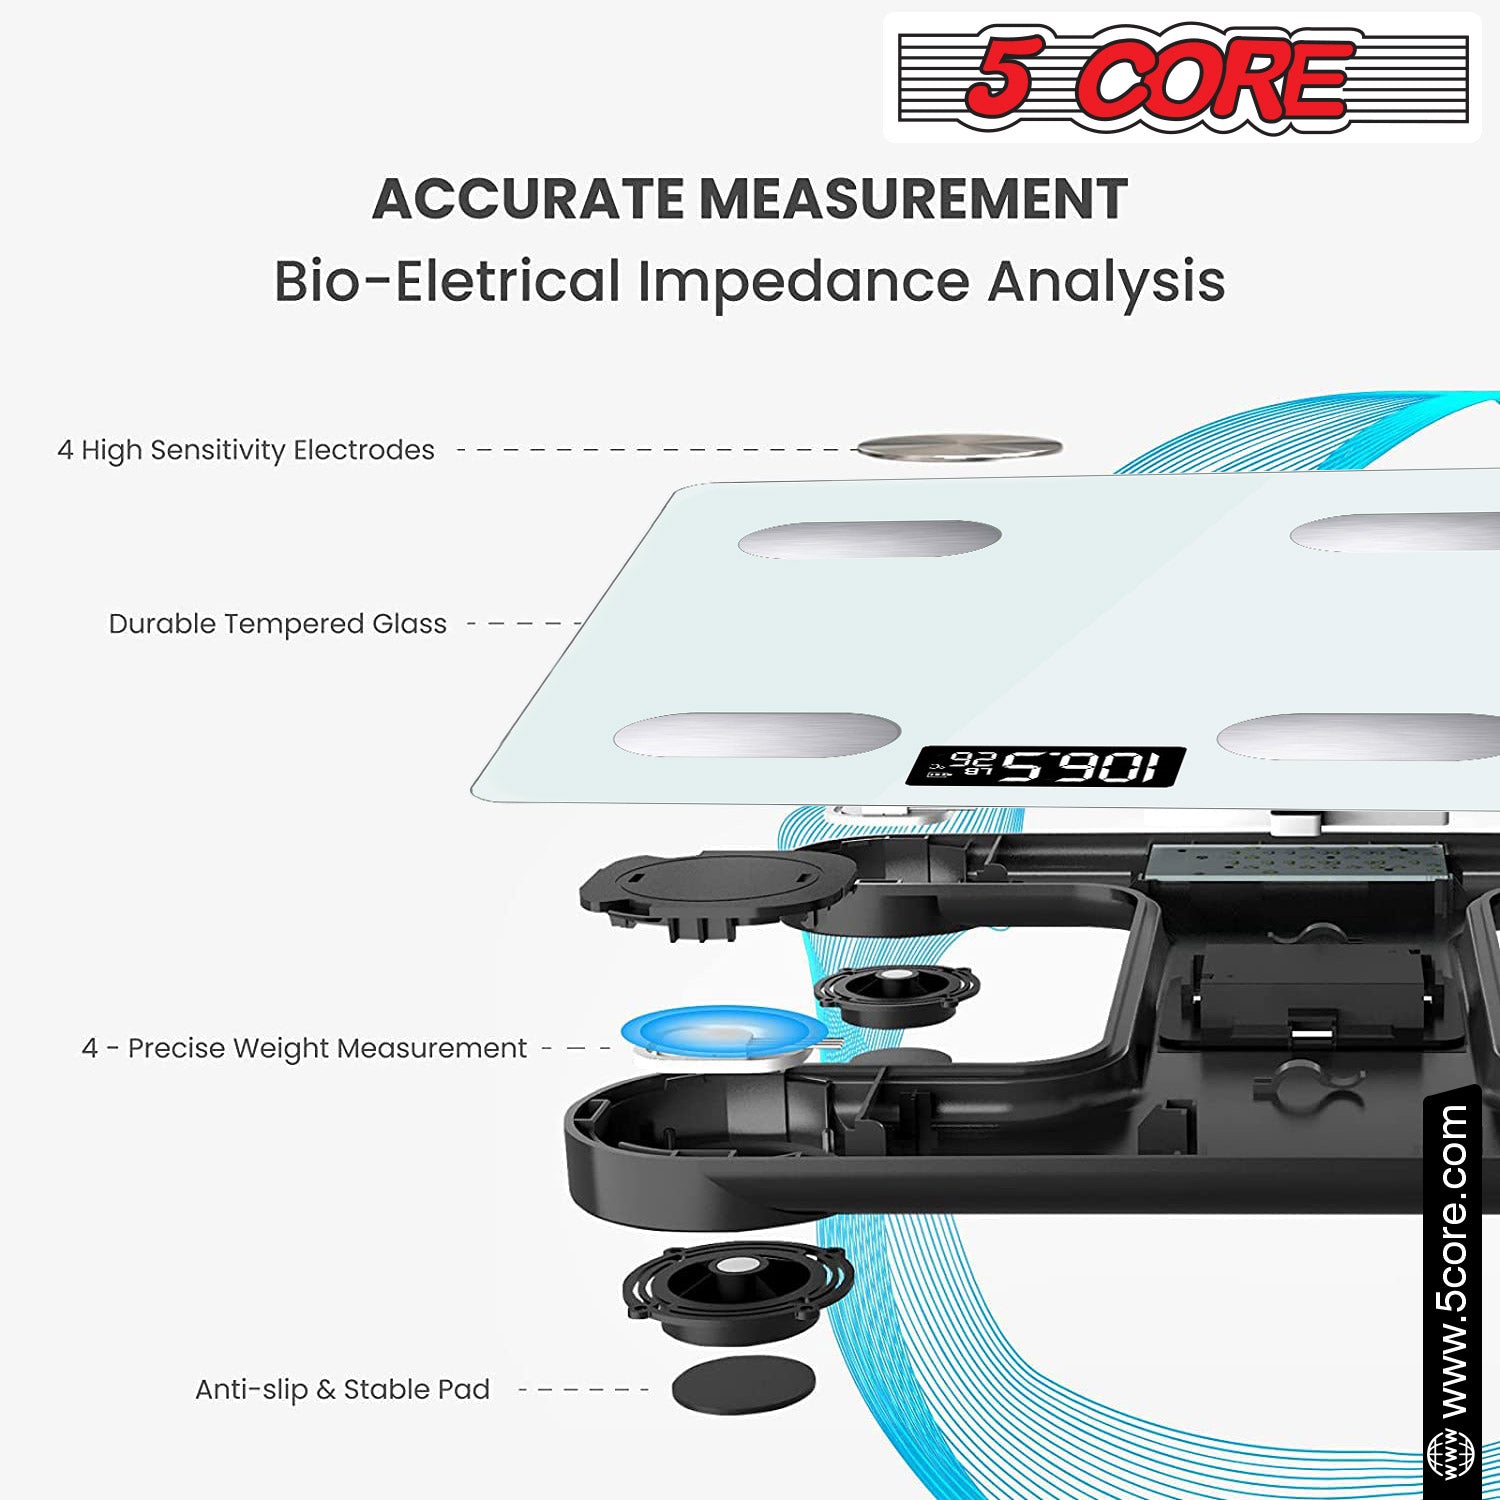 White 5 Core Bluetooth Smart Scale for Precision Body Weight Measurement